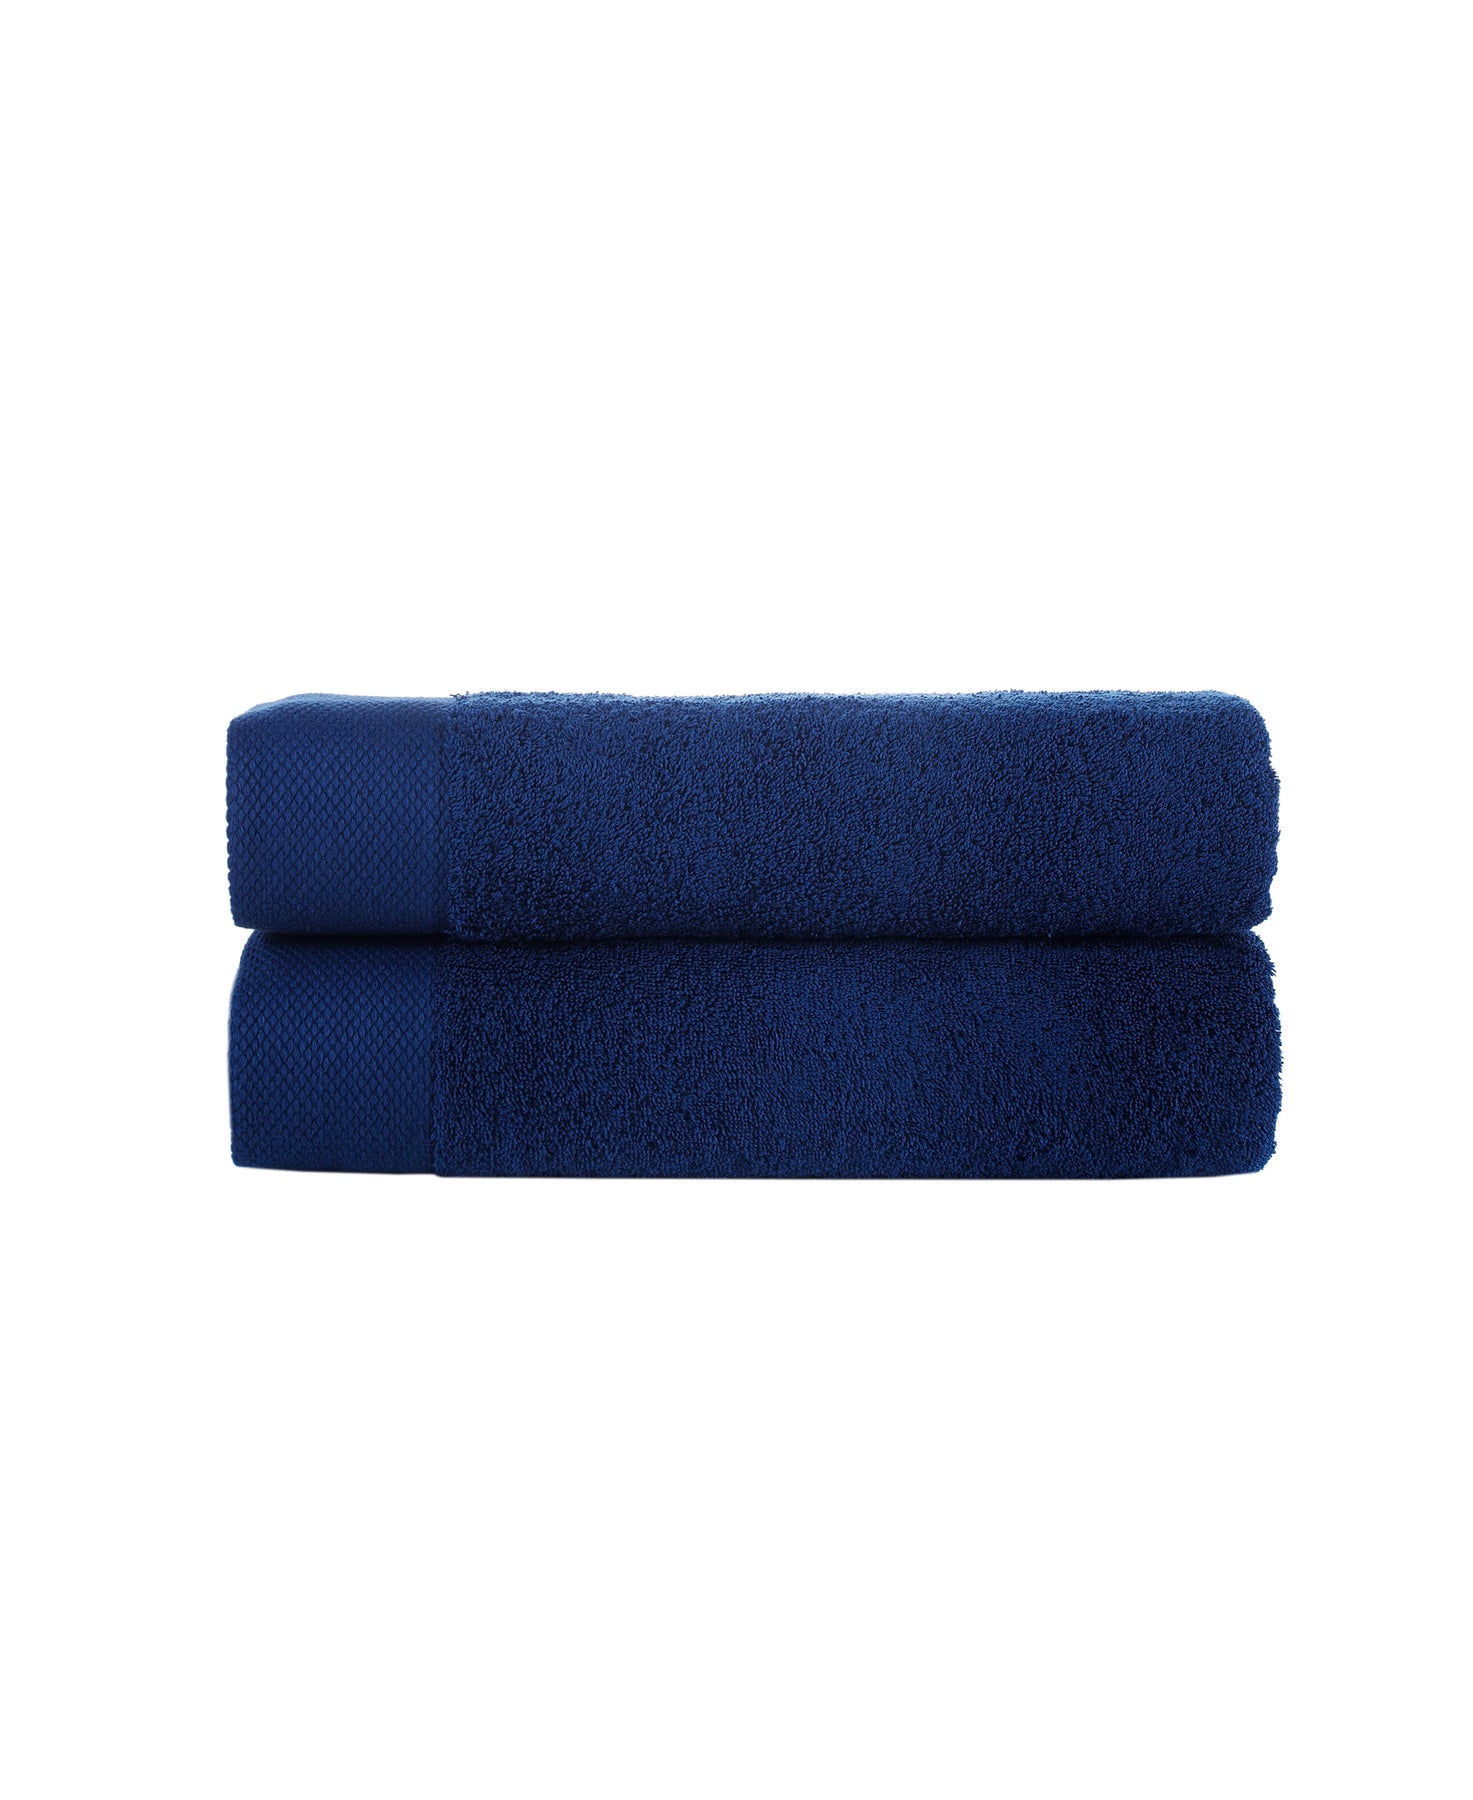 Brooks Brothers Herringbone 6 Pcs Towel Set - Navy